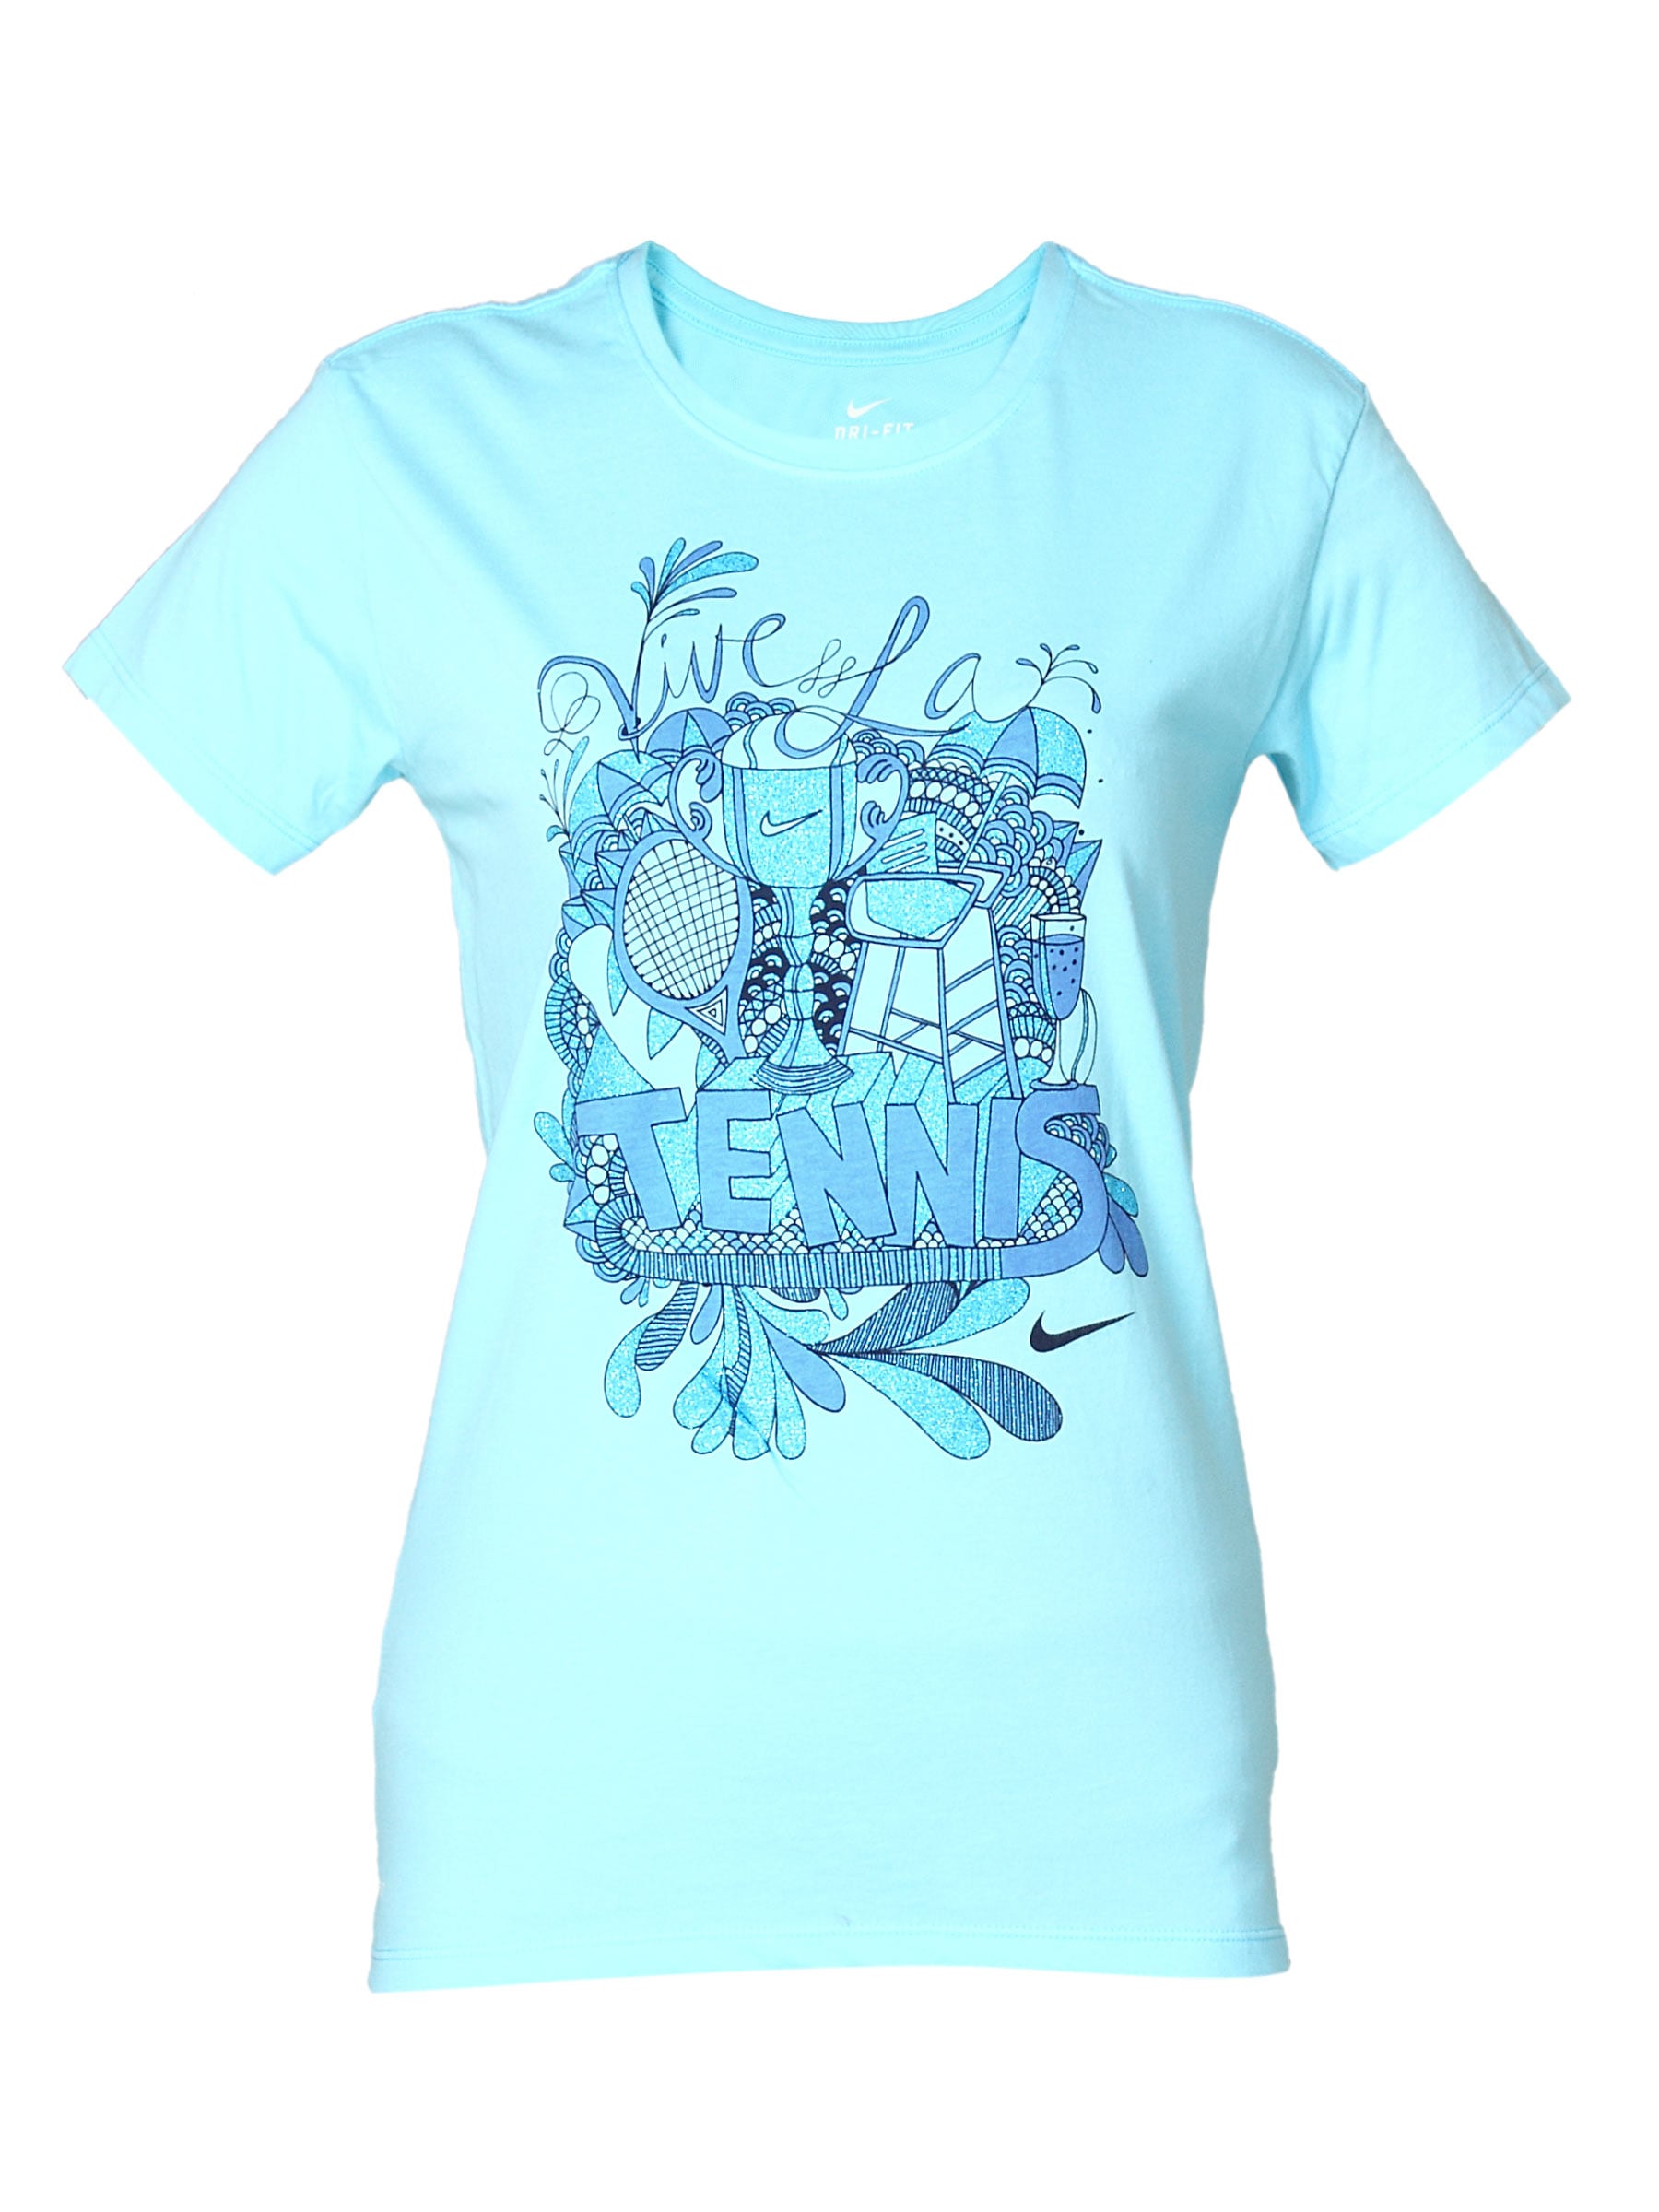 Nike Women's Line 9 Turquoise Blue T-shirt